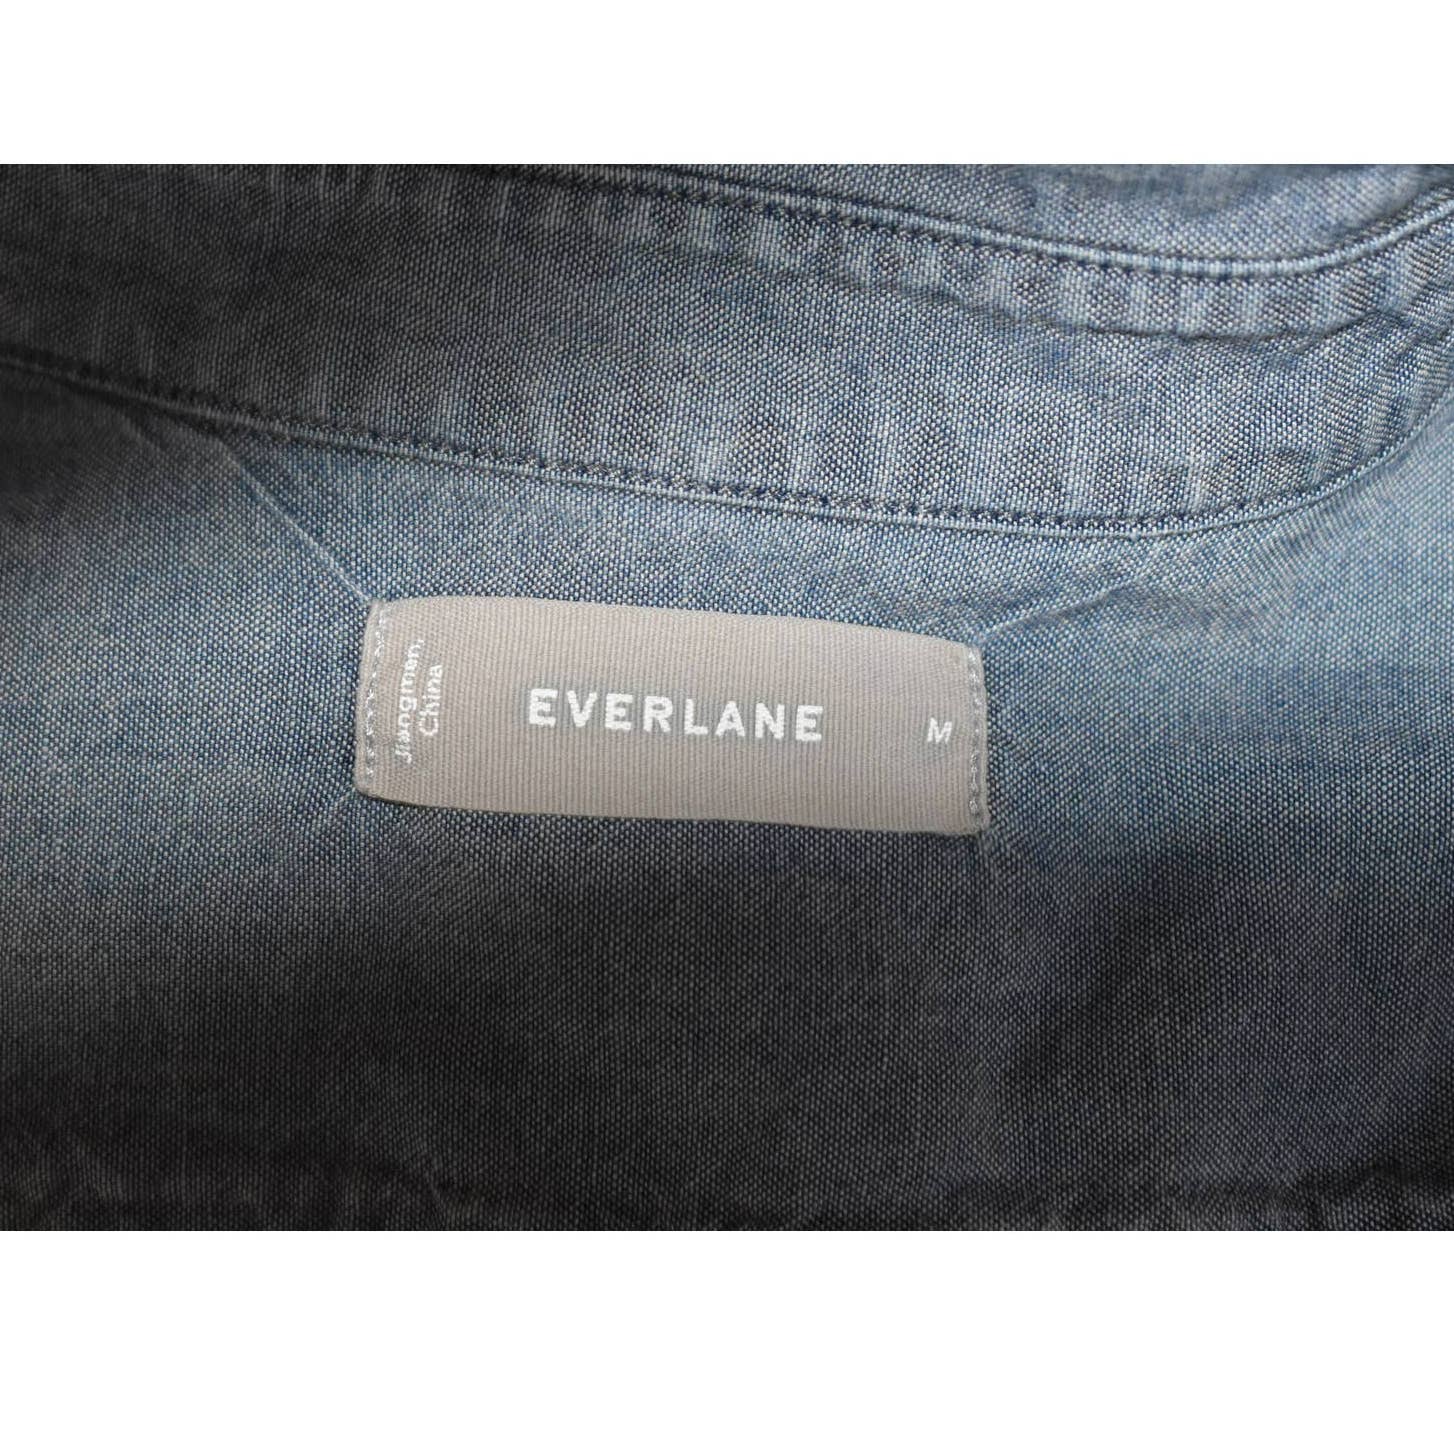 Everlane Blue Chambray Button Down Collar Shirt - M